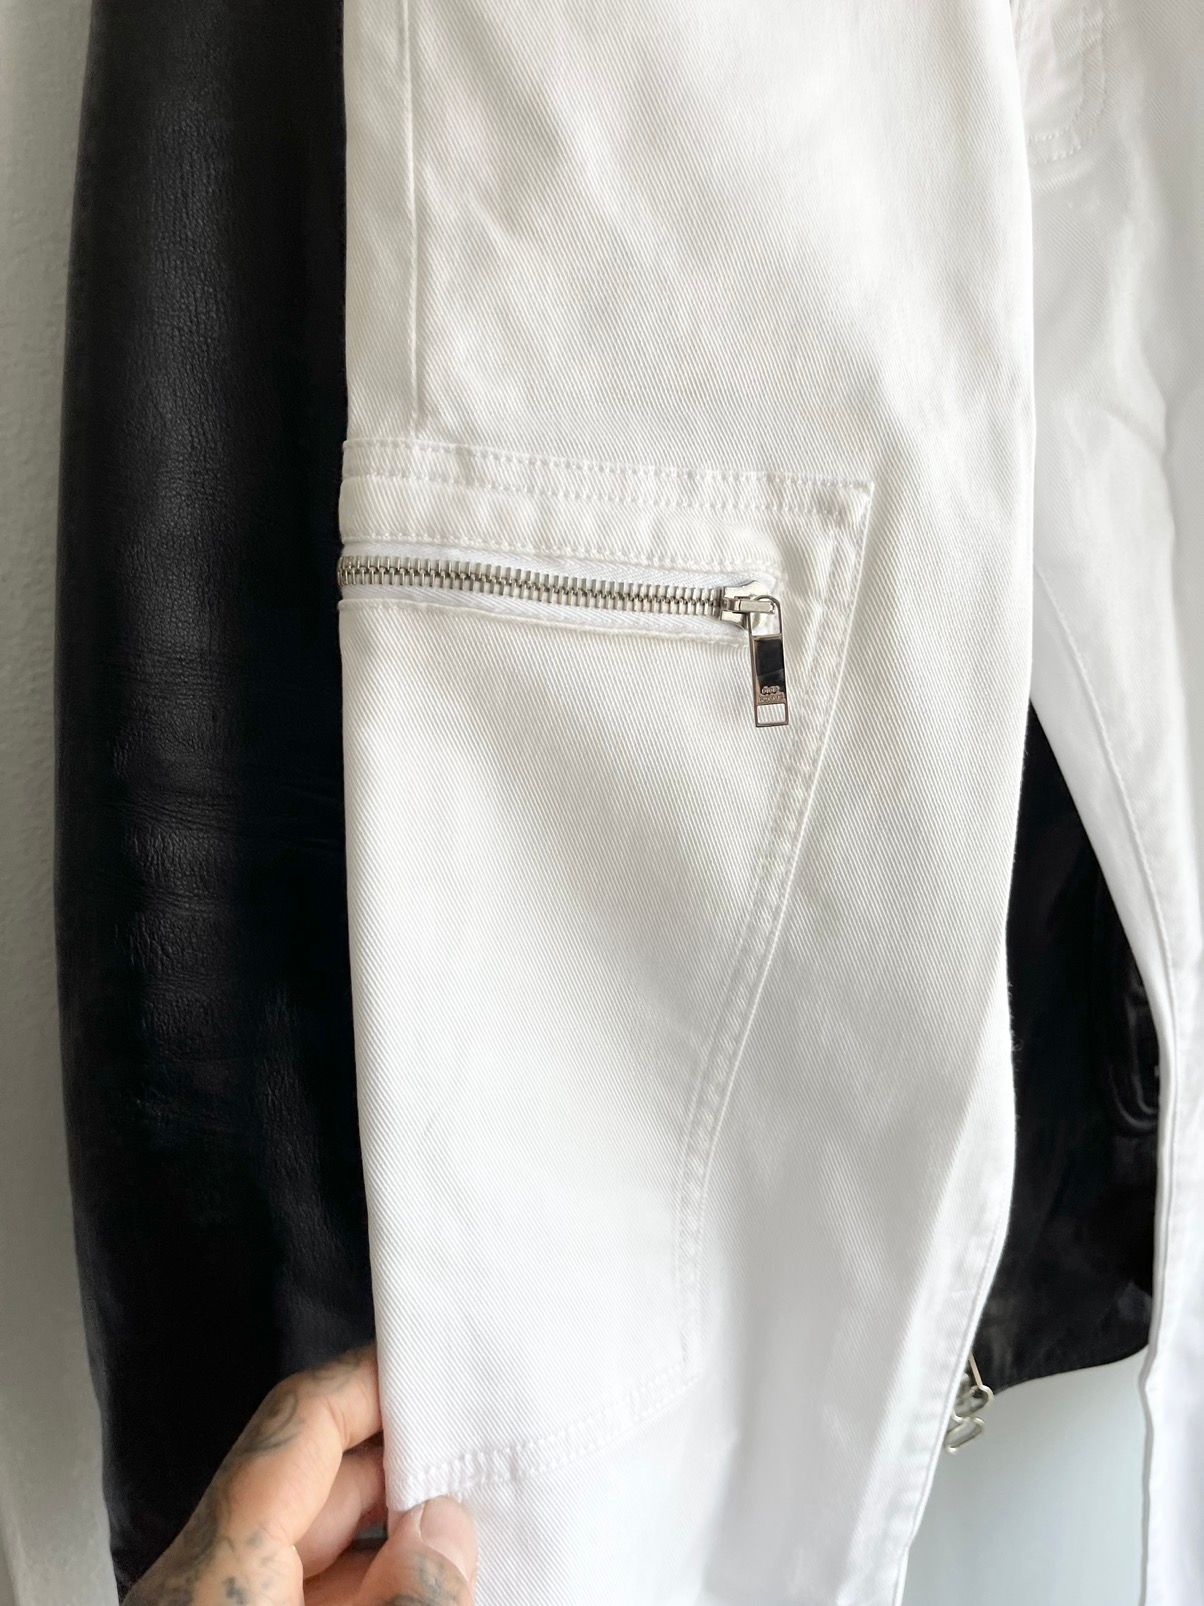 Dior Homme Kim Jones 2019 White CARGO Military Jeans Pants